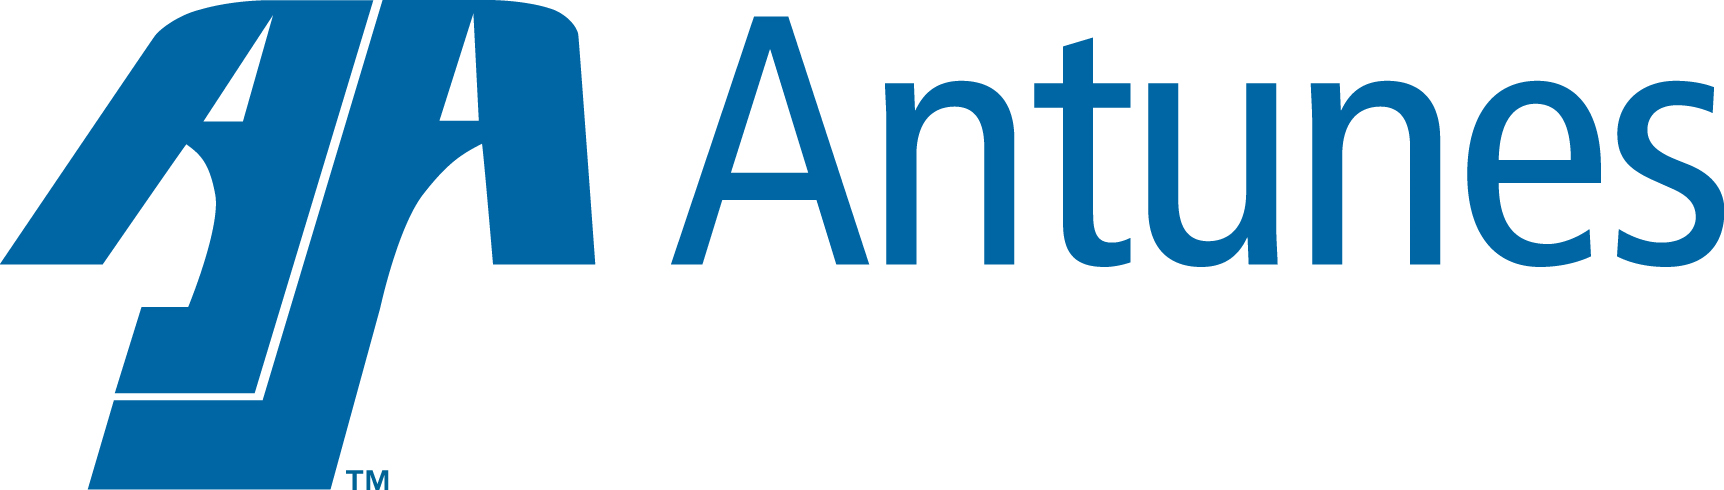 A.J. Antunes & Co. logo